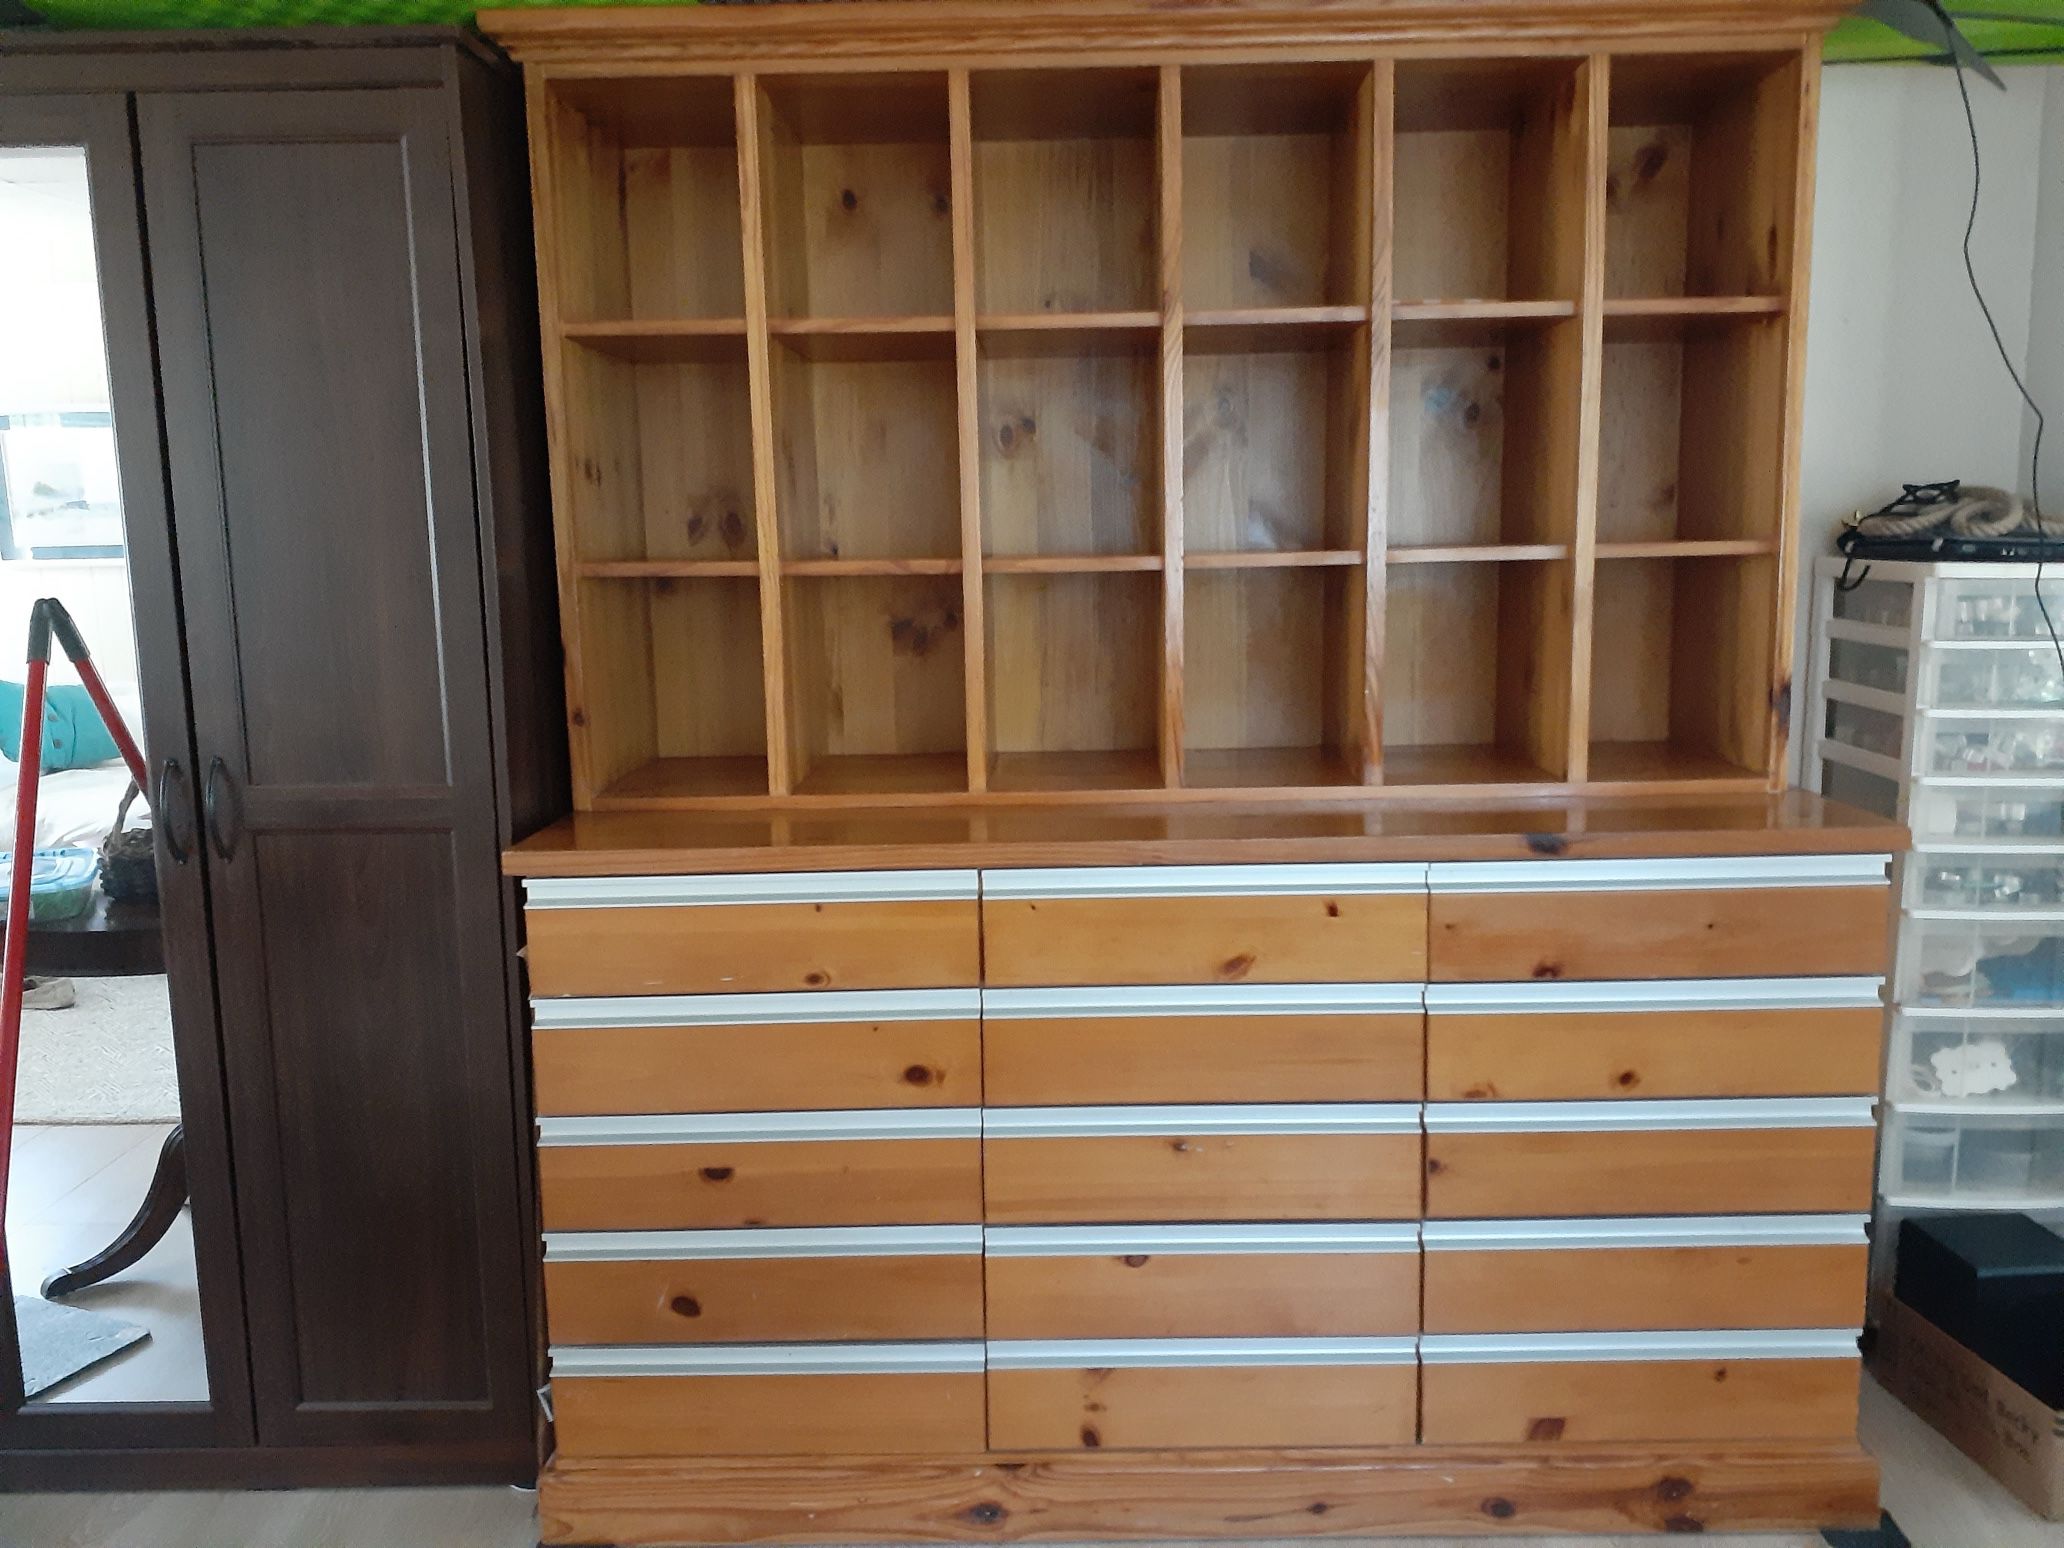 Large Cubby/Bookshelf And Multi-drawer Organizer